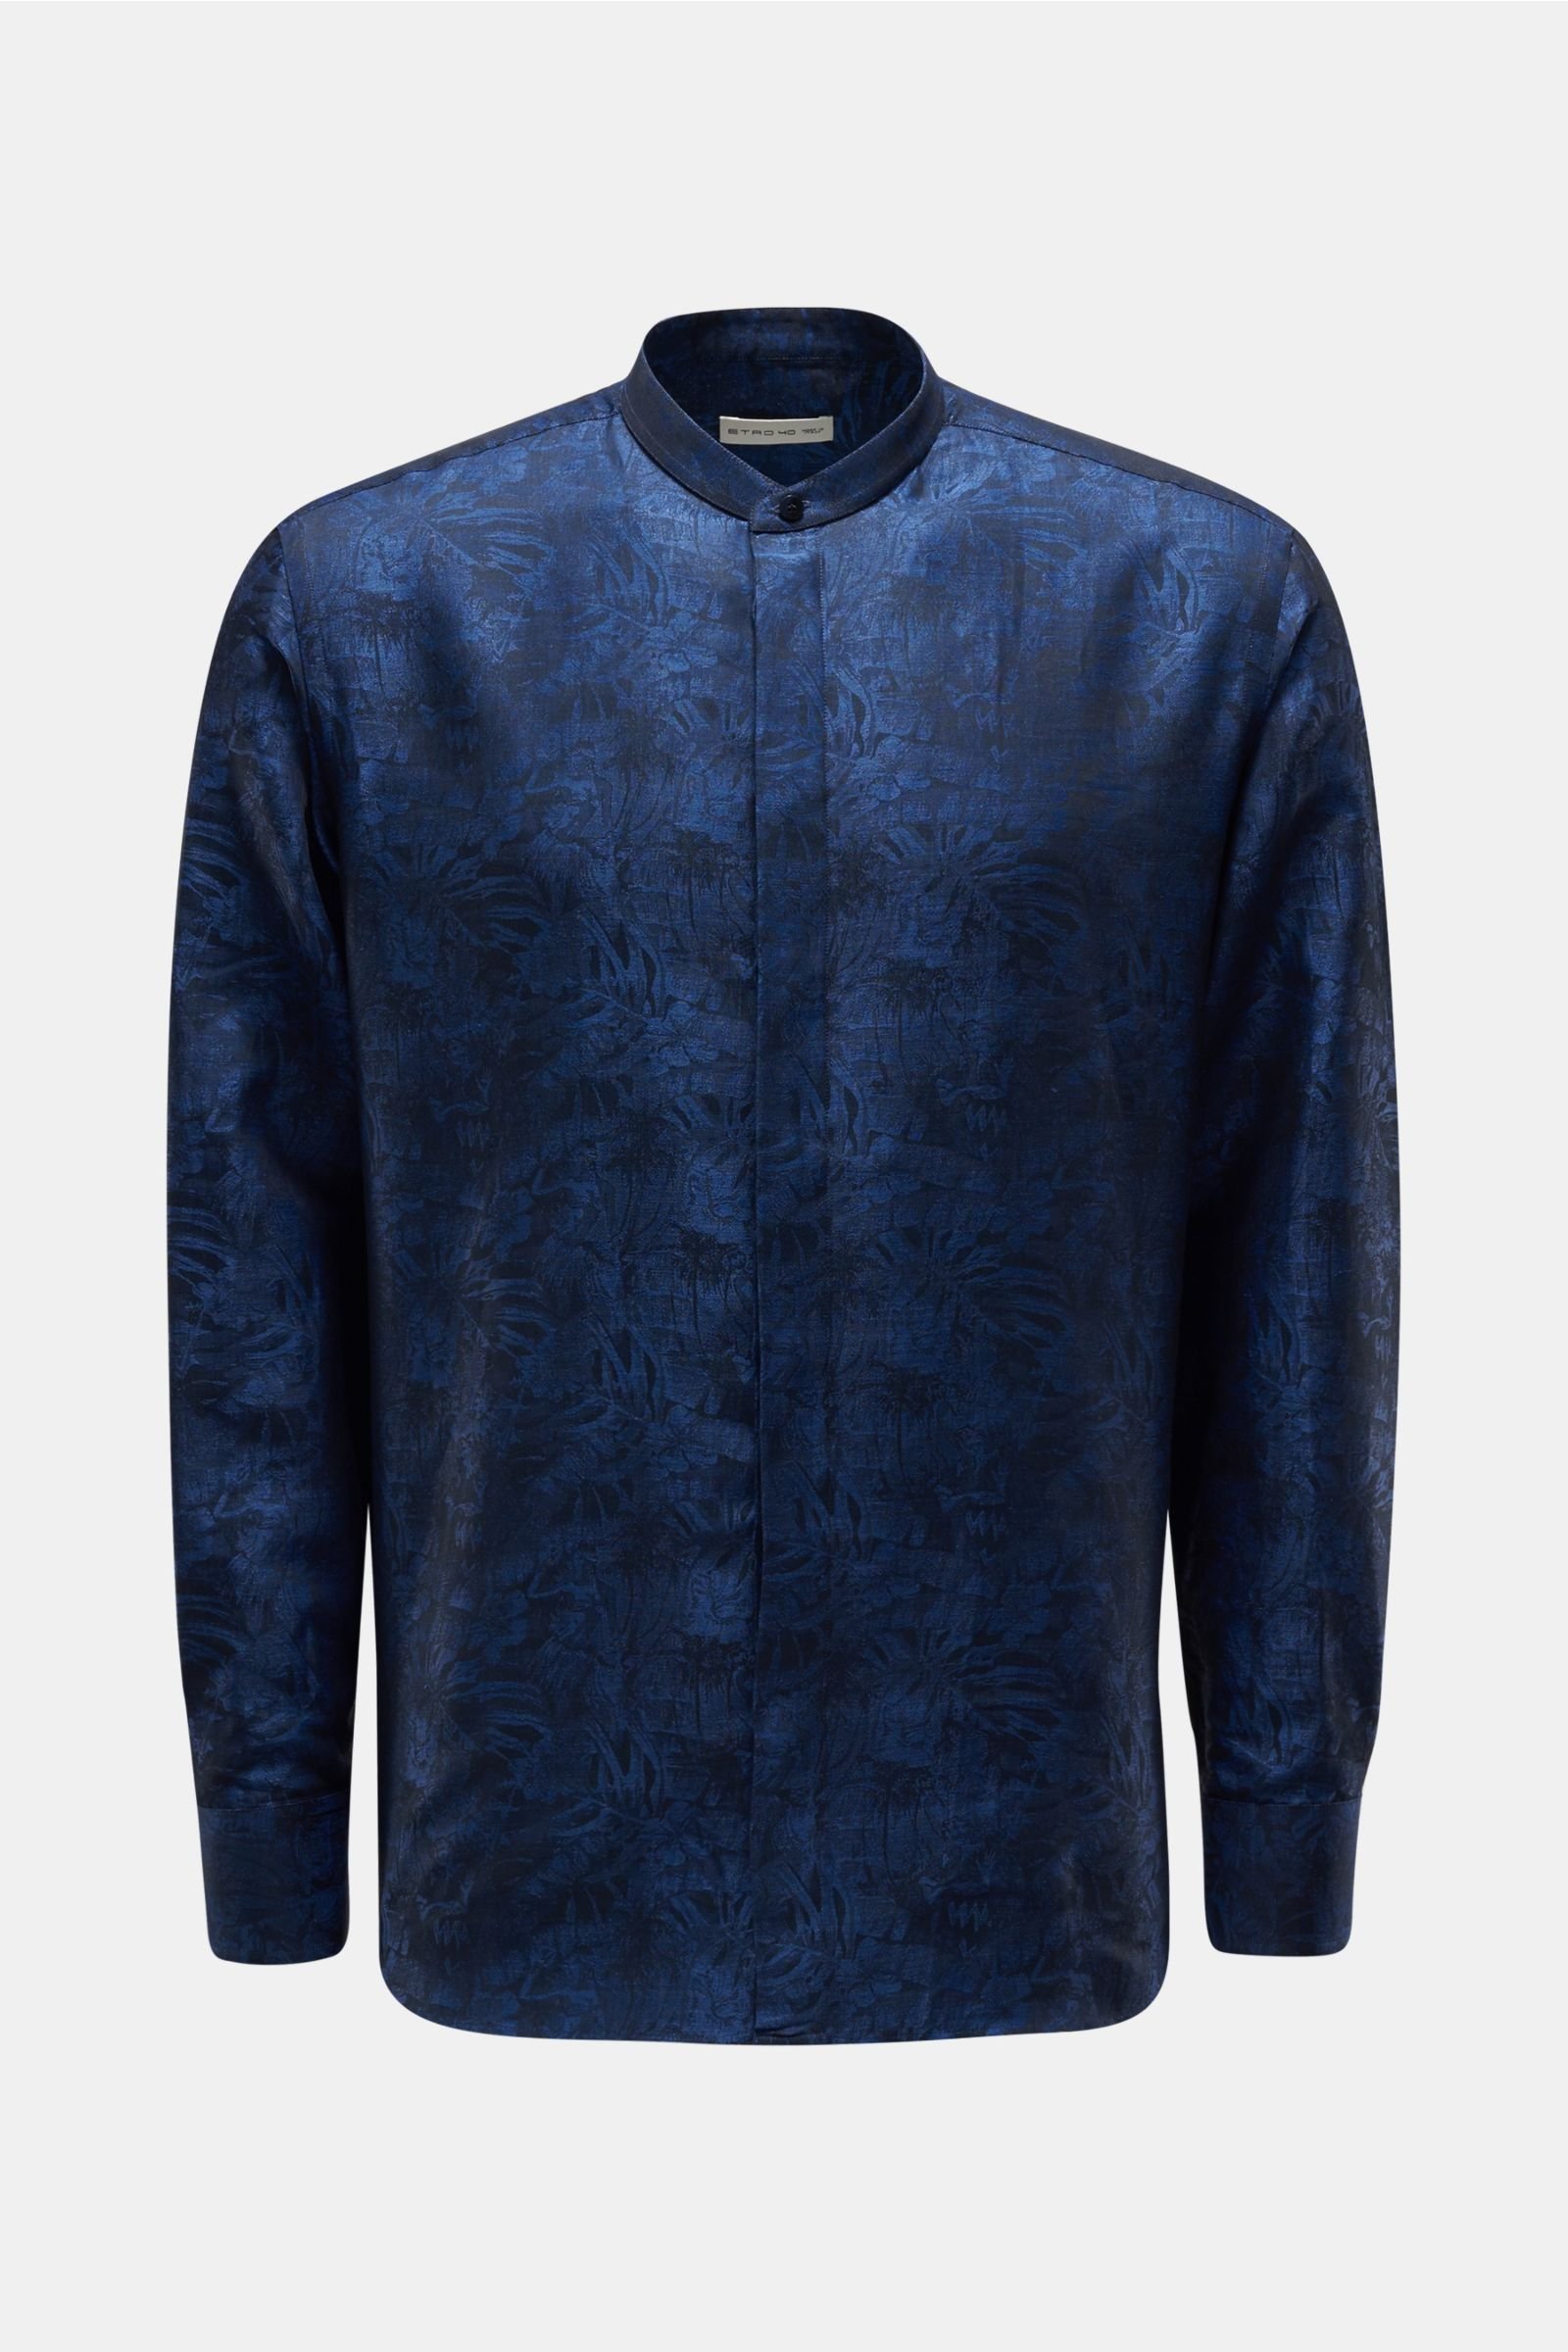 Jacquard shirt grandad collar dark blue patterned